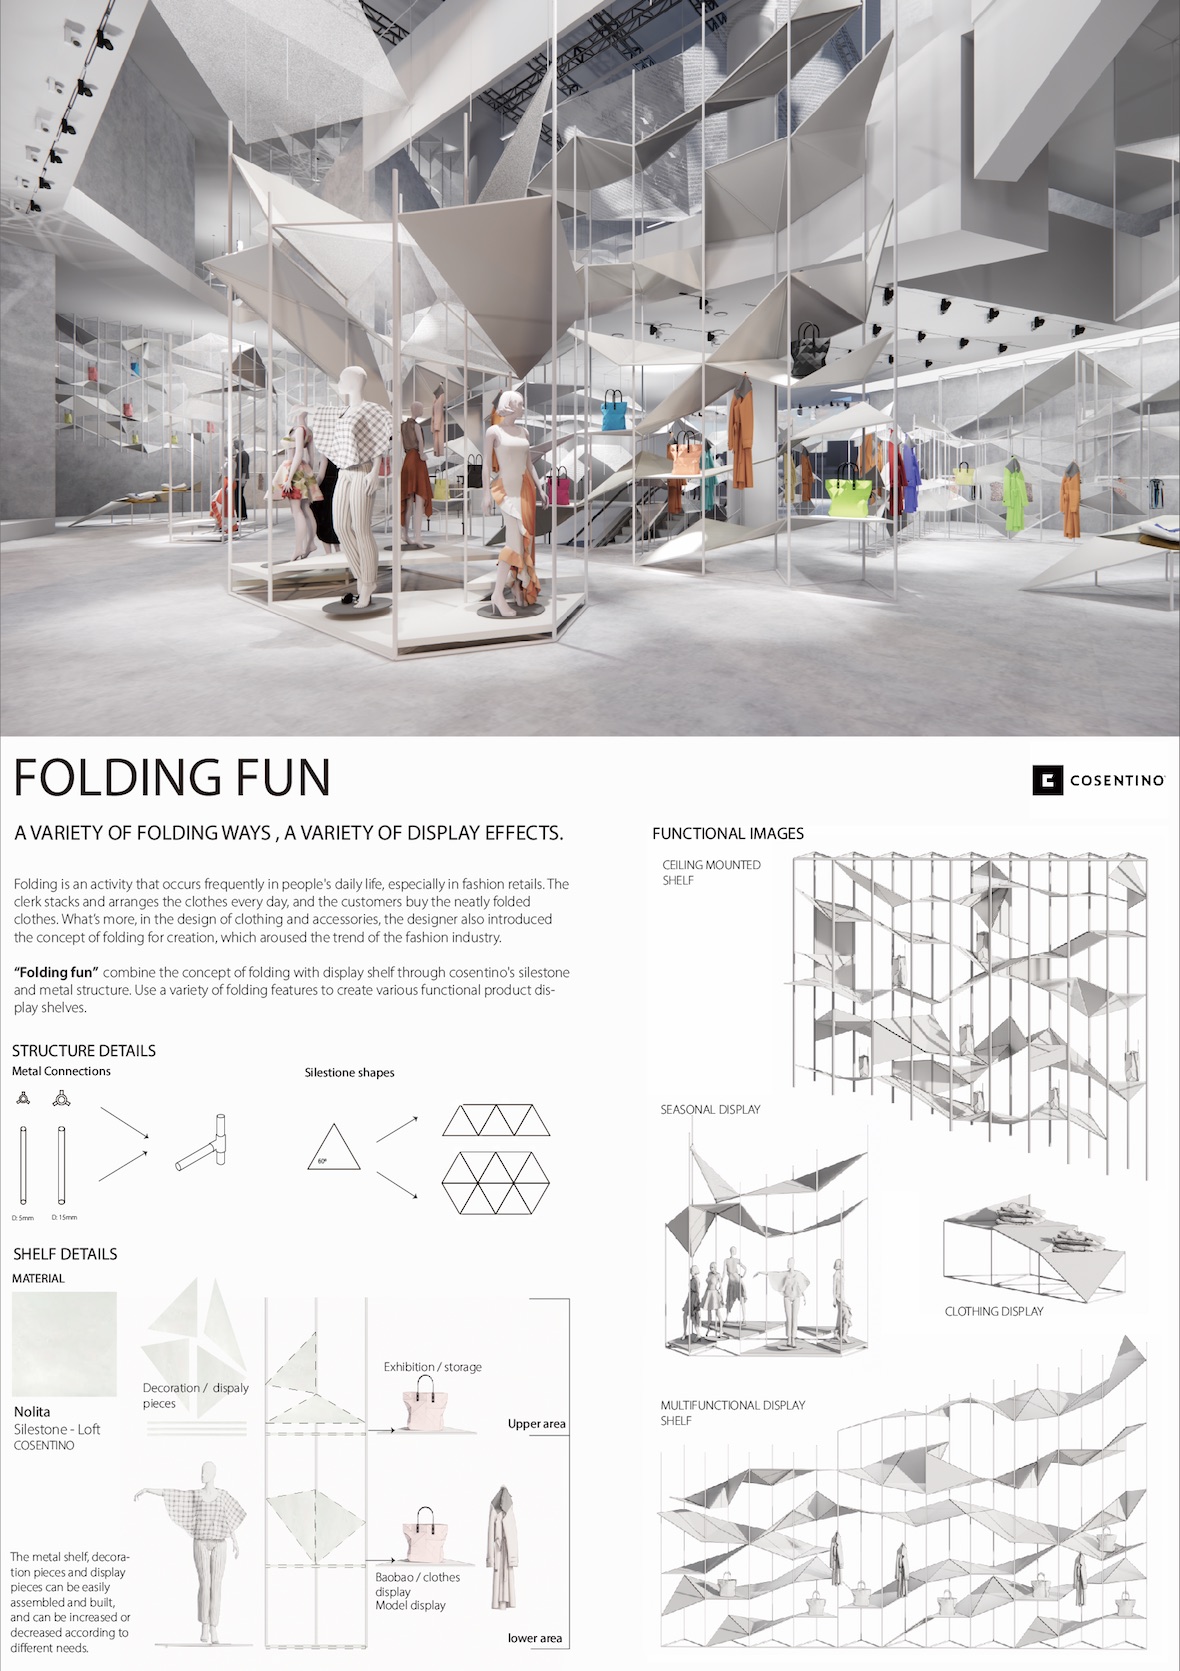 Accésit en la categoría de diseño – Folding Fun Design Acknowledgement – Folding Fun